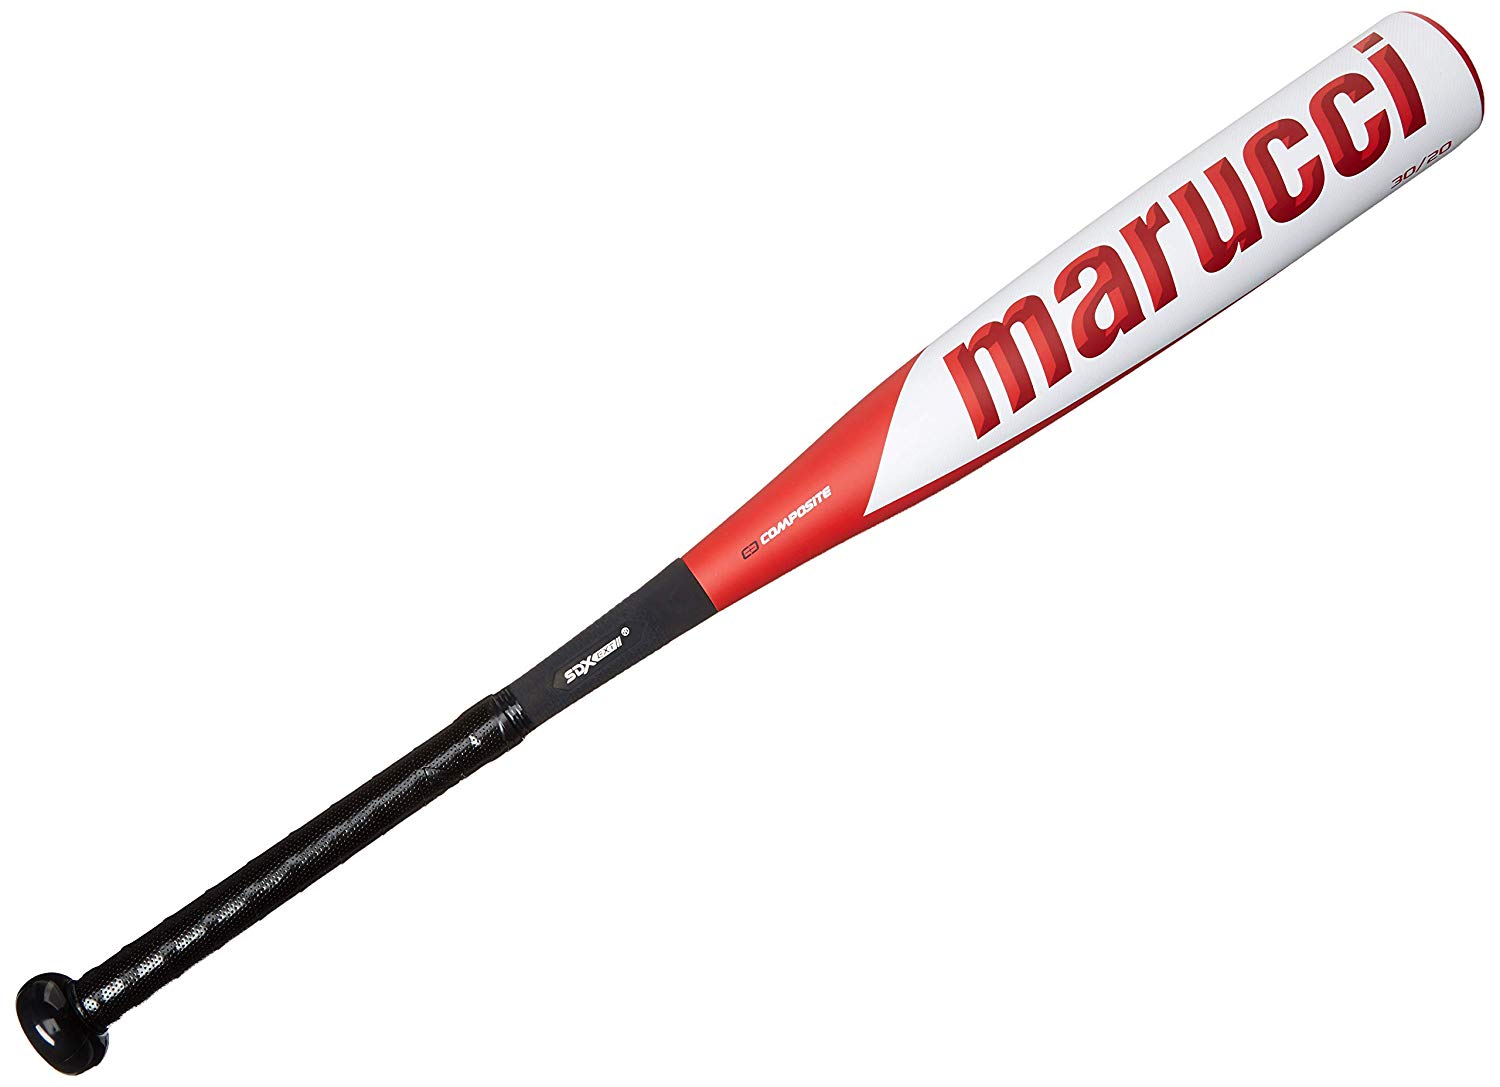 marucci-cat-composite-senior-league-baseball-bat-10-msbccp10-31-inch-21-oz MSBCCP10-3121 Marucci 849817068144 The CAT Composite -10 is a USSSA certified two-piece composite bat